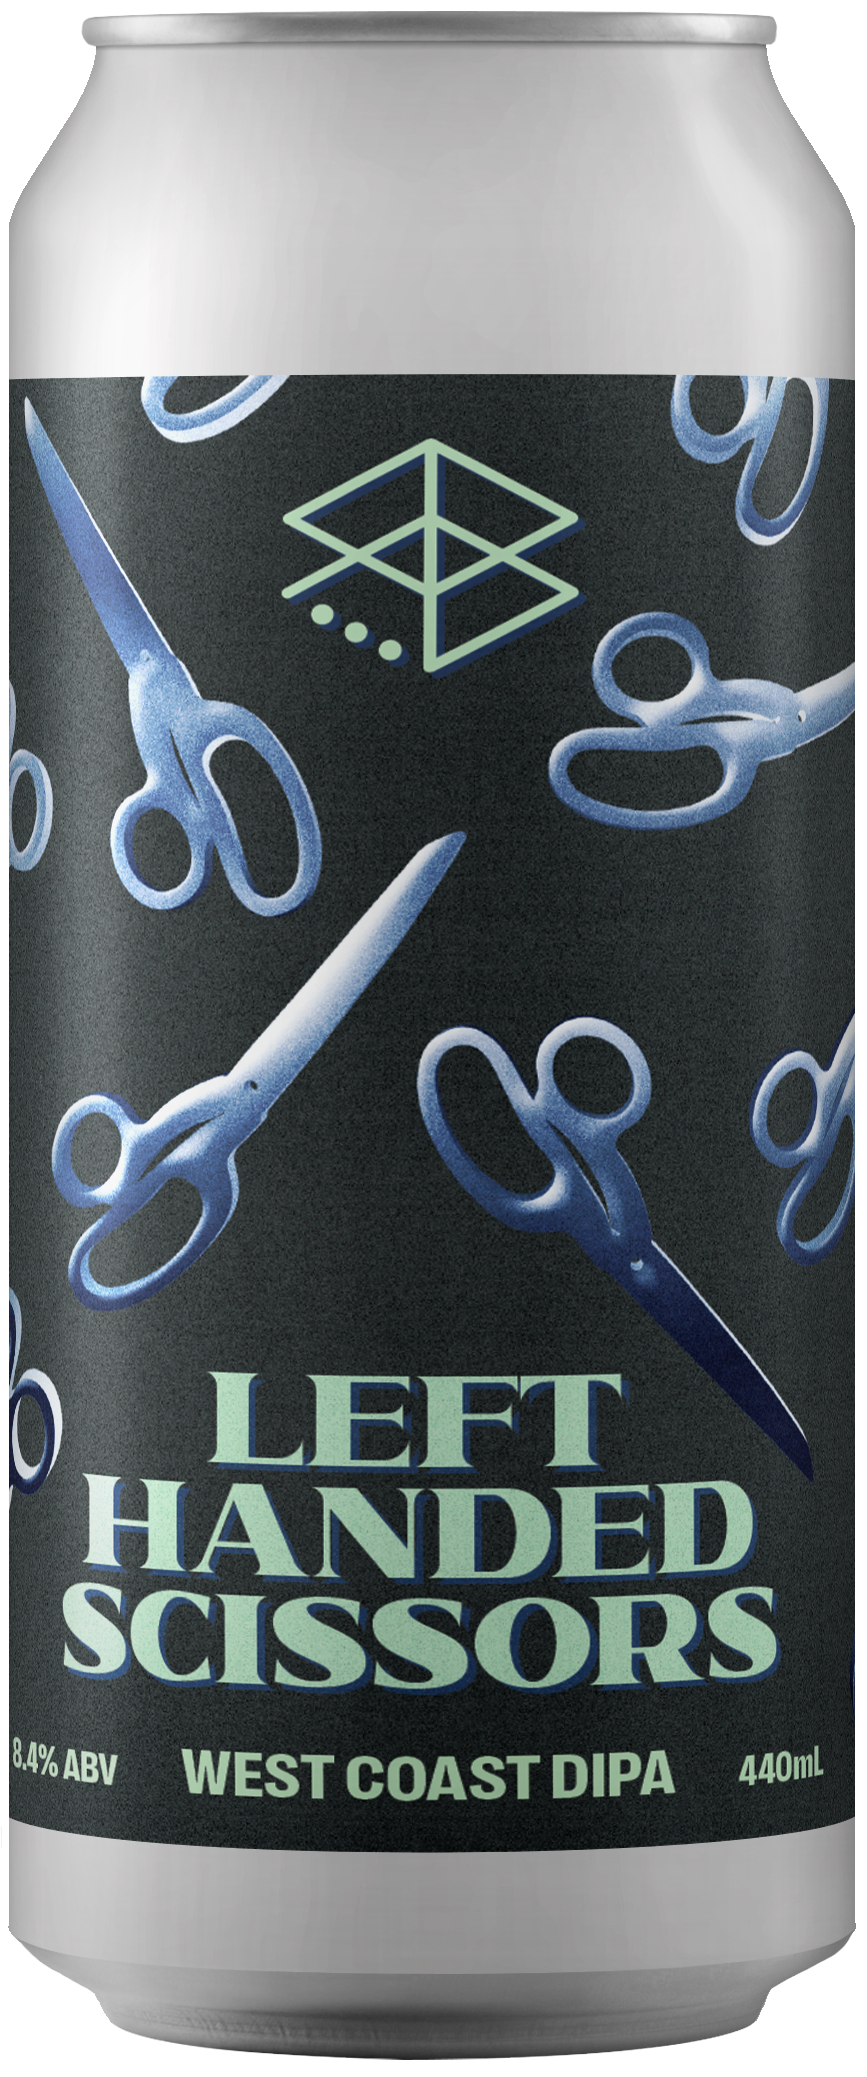 Left Handed Scissors - West Coast DIPA